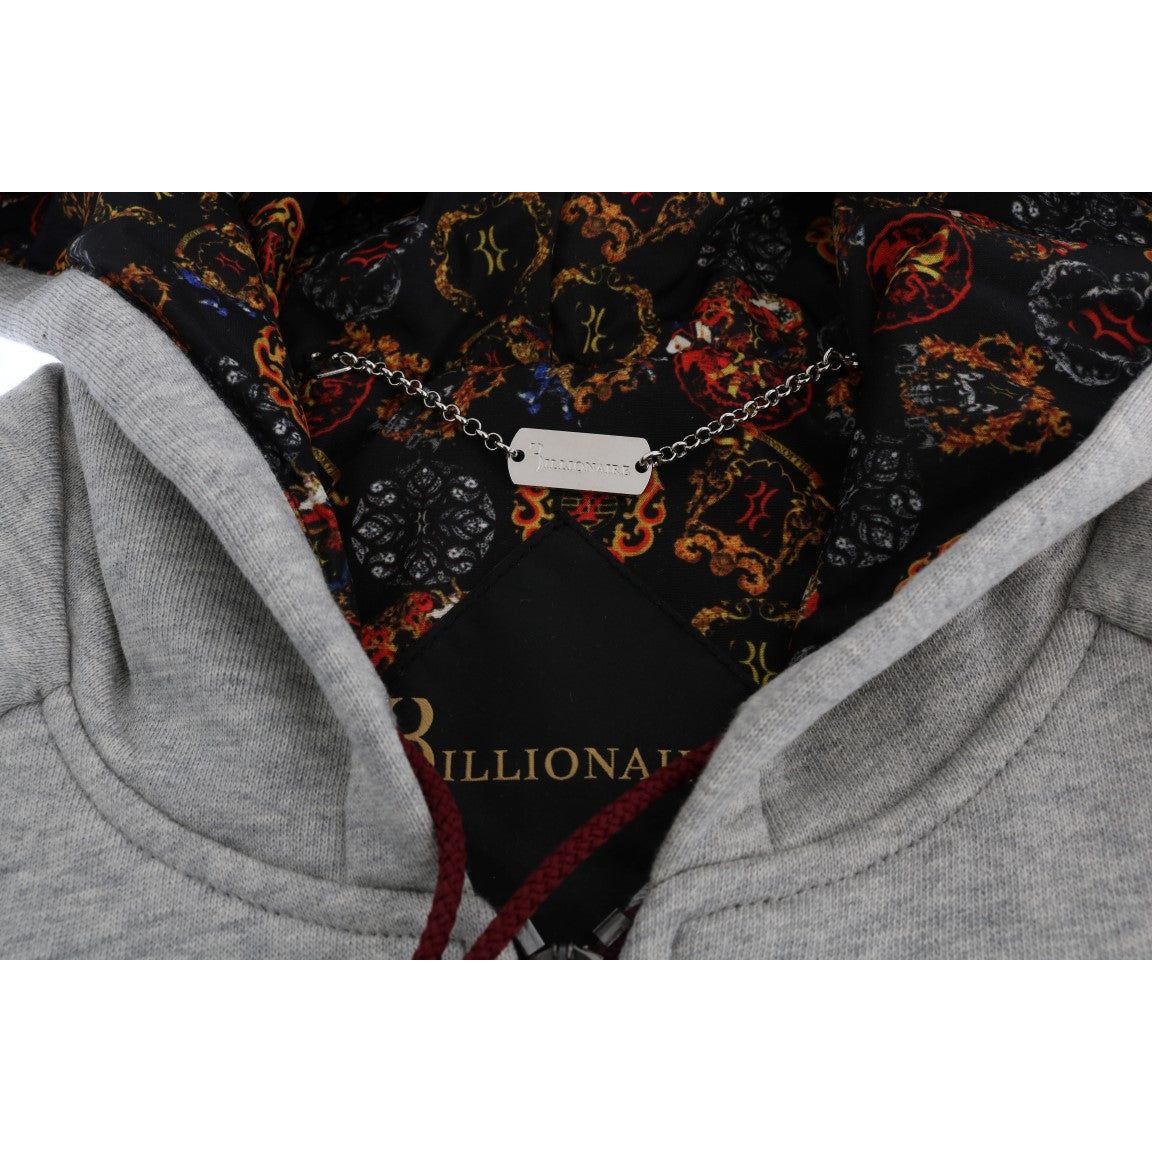 Billionaire Italian Couture Elegant Gray Cotton Sweatsuit Ensemble gray-cotton-hooded-sweatsuit-1 462429-gray-cotton-hooded-sweatsuit-2-7.jpg